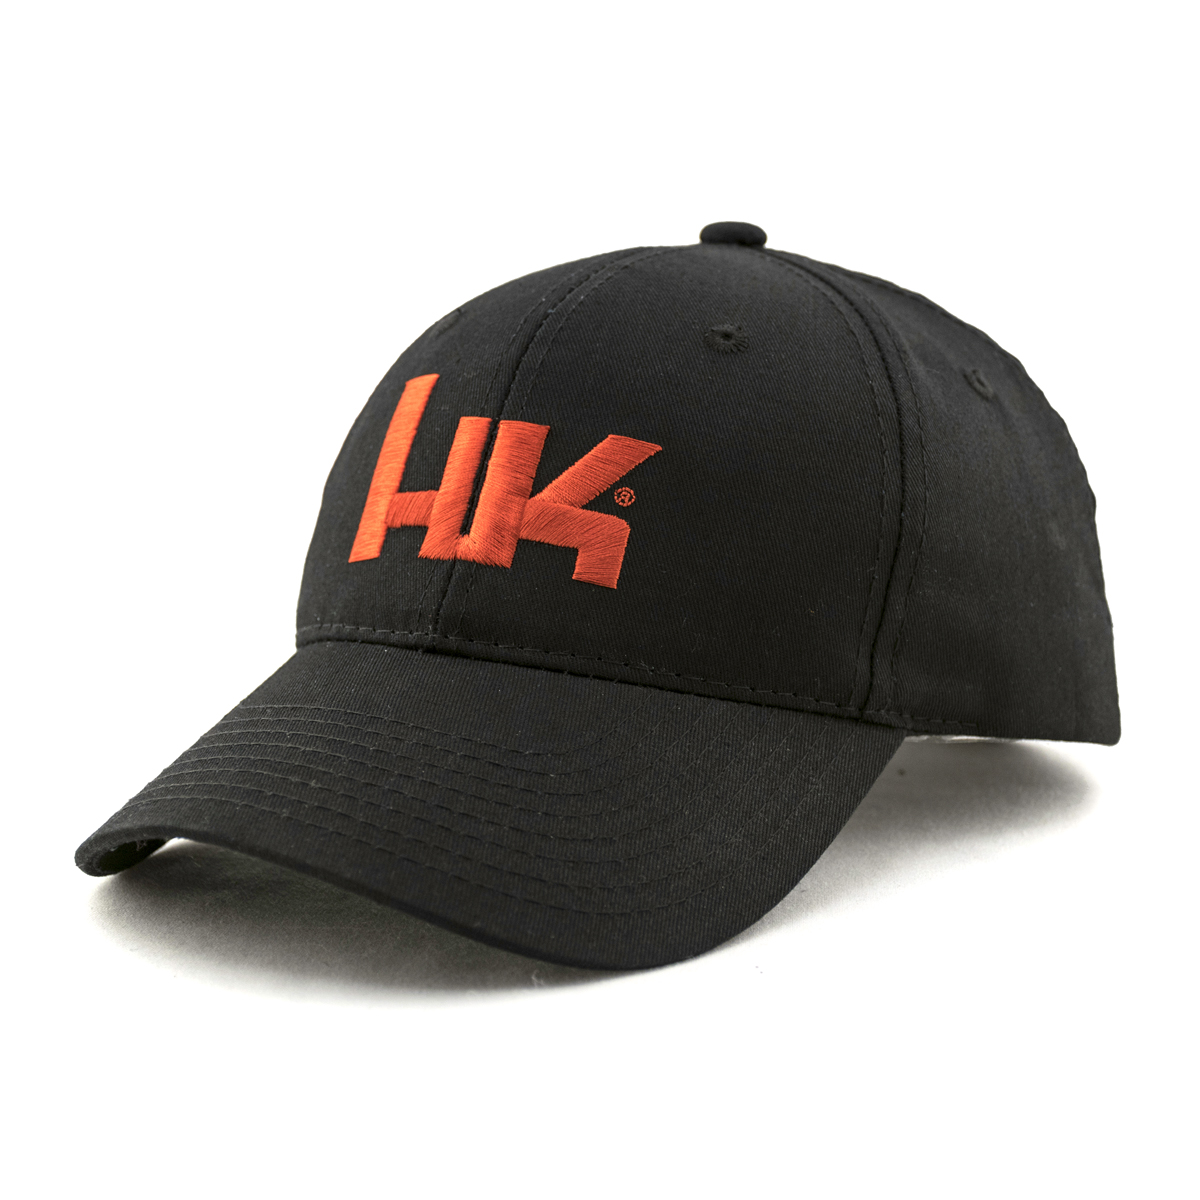 Heckler and Koch Hat